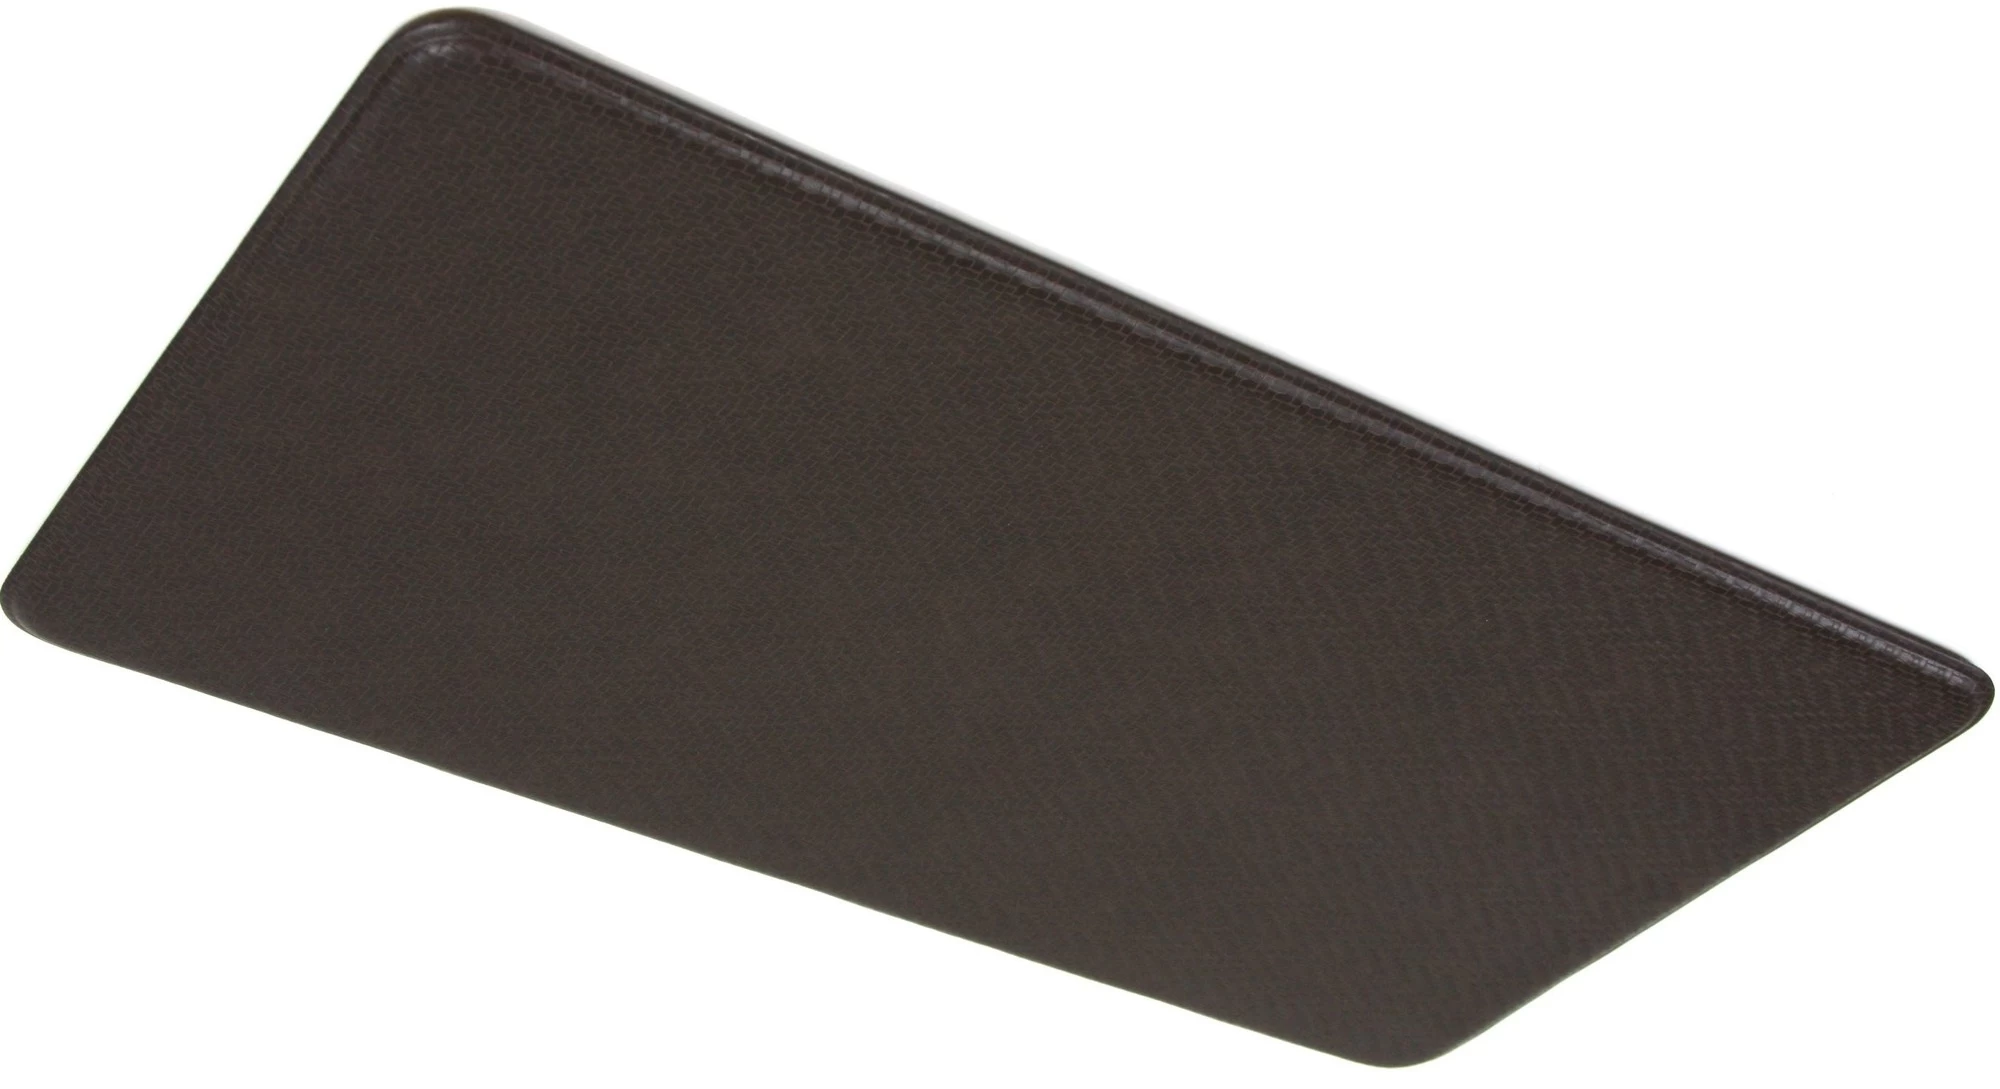 OEM design SGS certification washable black bath mat